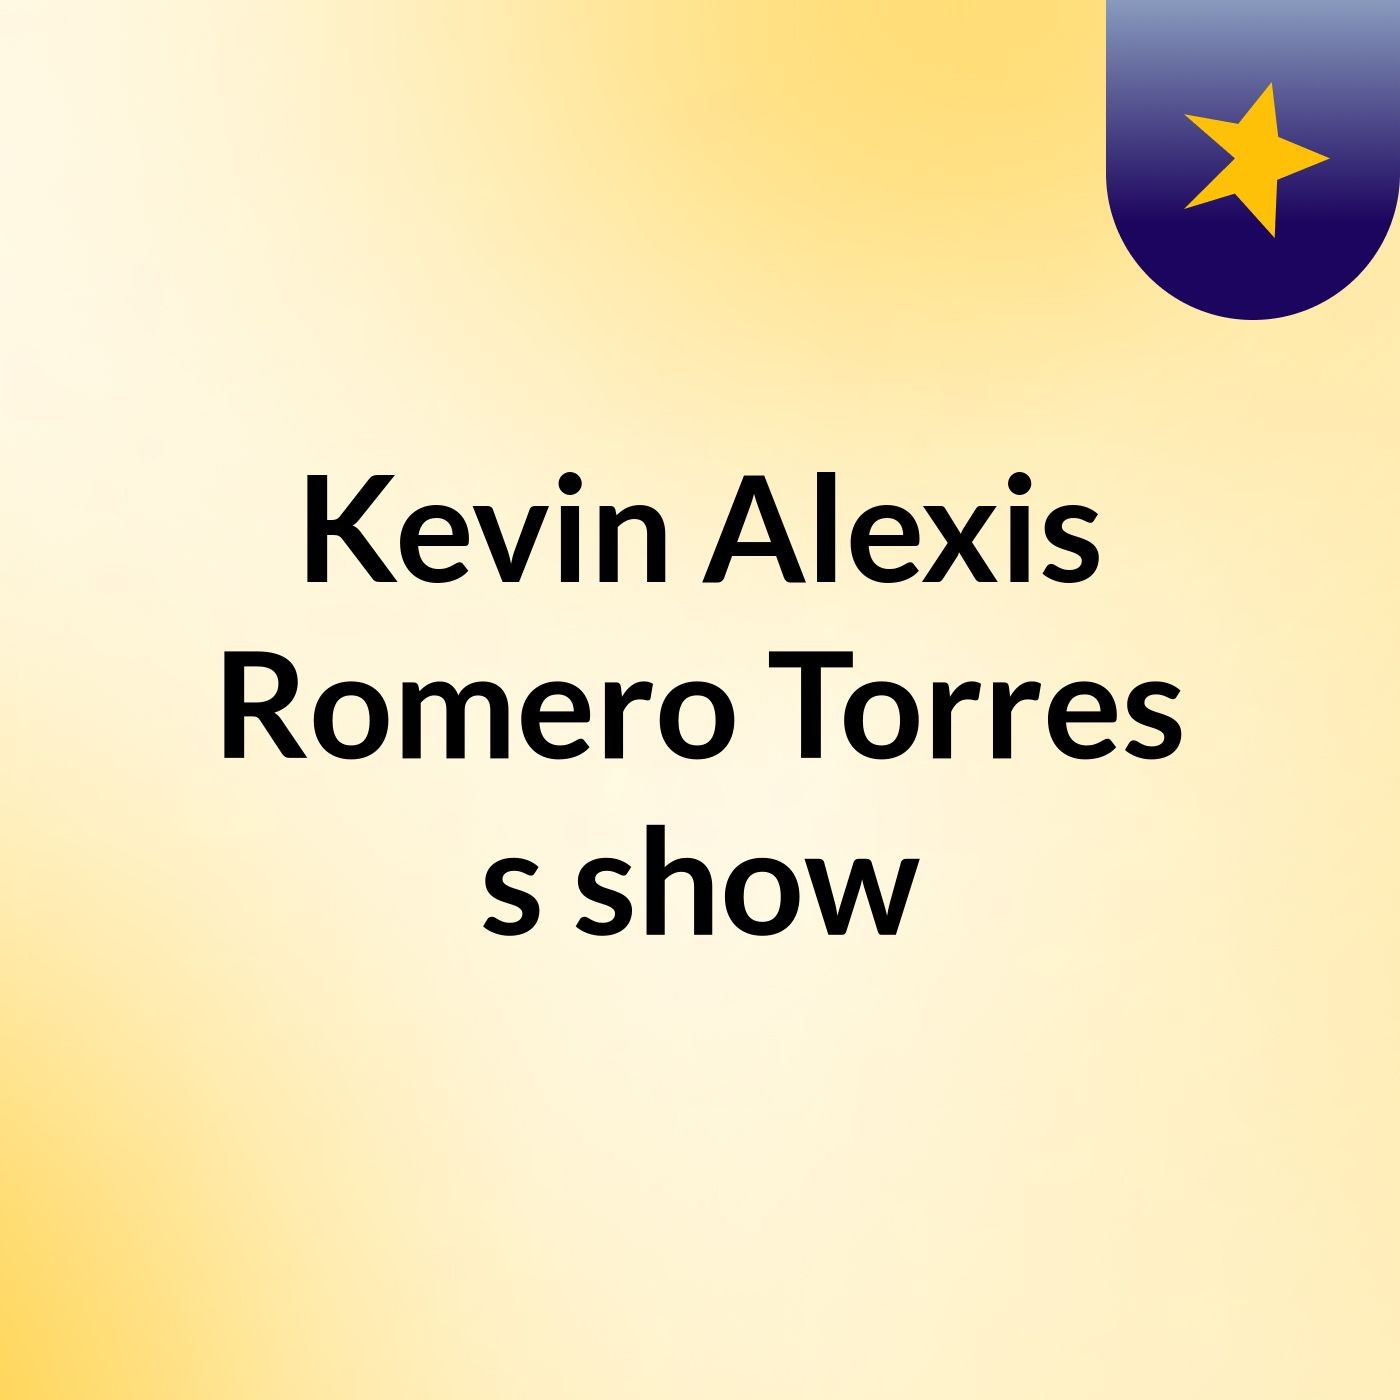 Kevin Alexis Romero Torres's show